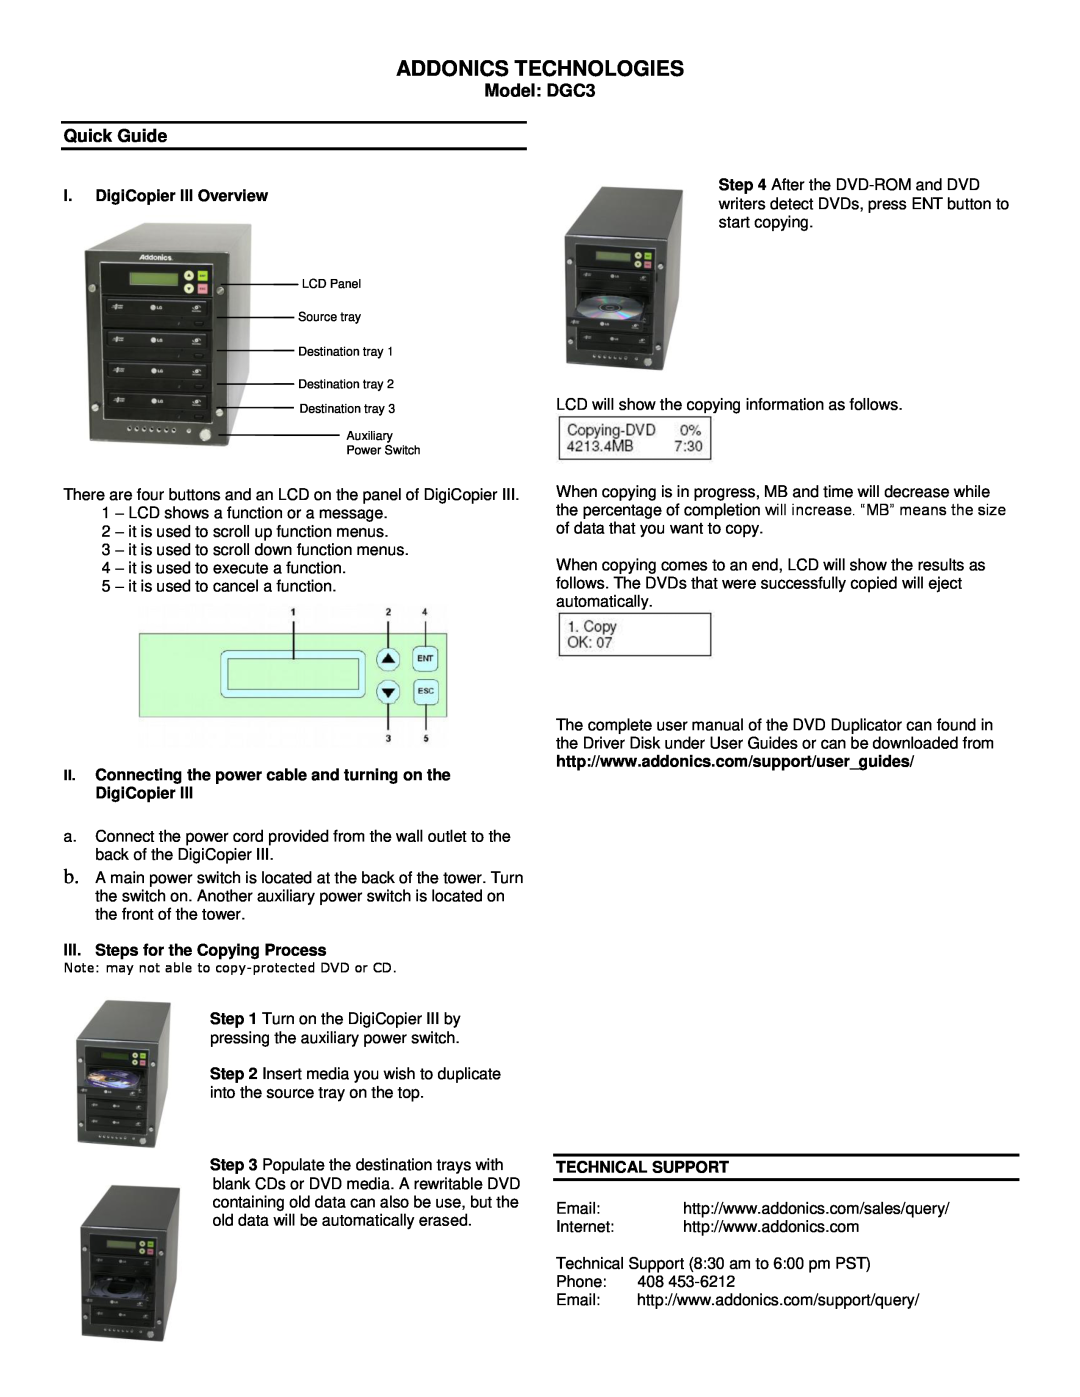 Addonics Technologies user manual Addonics Technologies, Model DGC3 Quick Guide, I. DigiCopier III Overview 